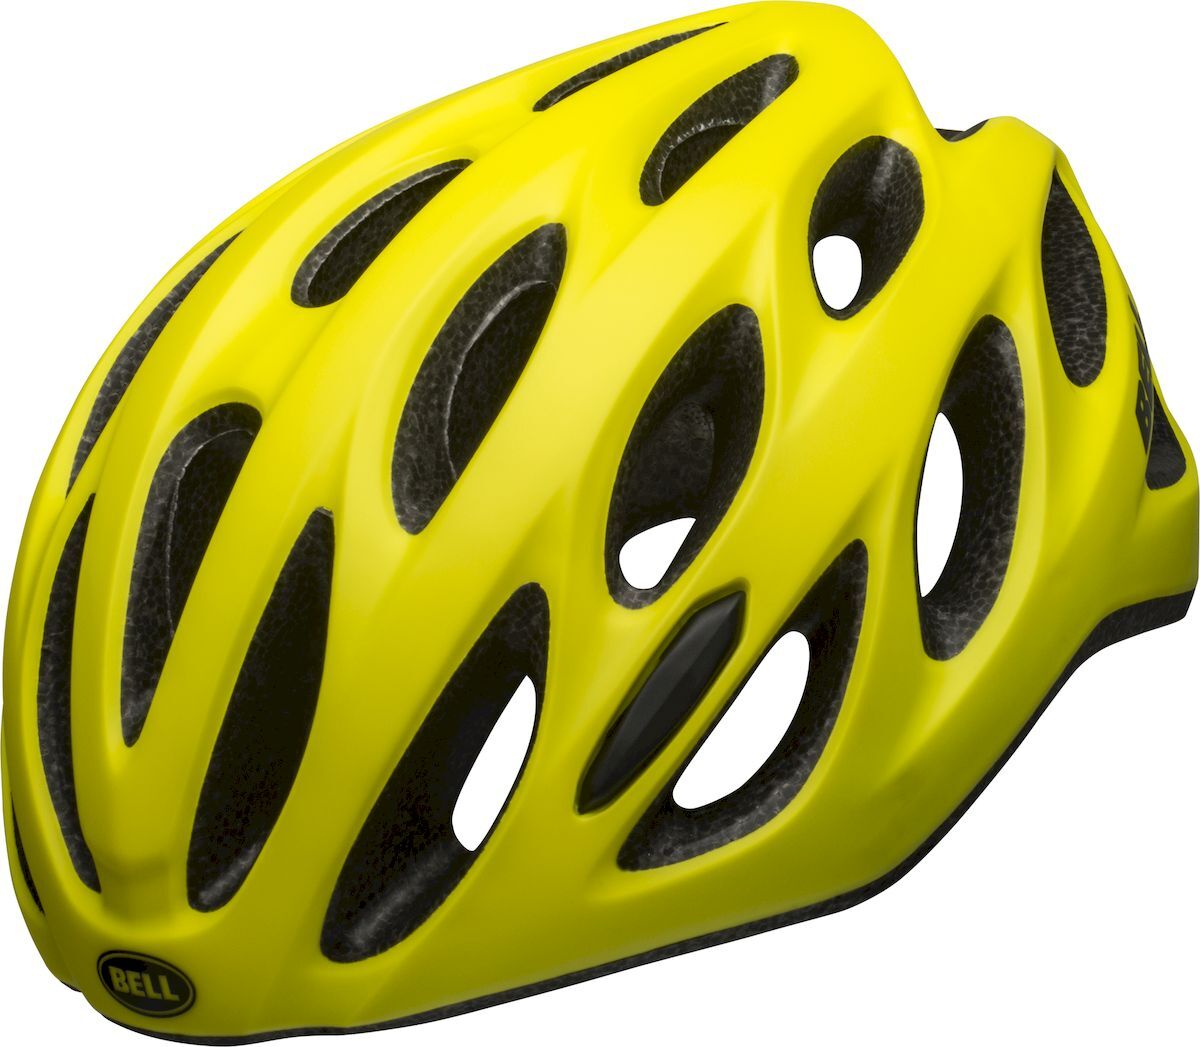 Bell Helmets Tracker R - Casco bici da corsa